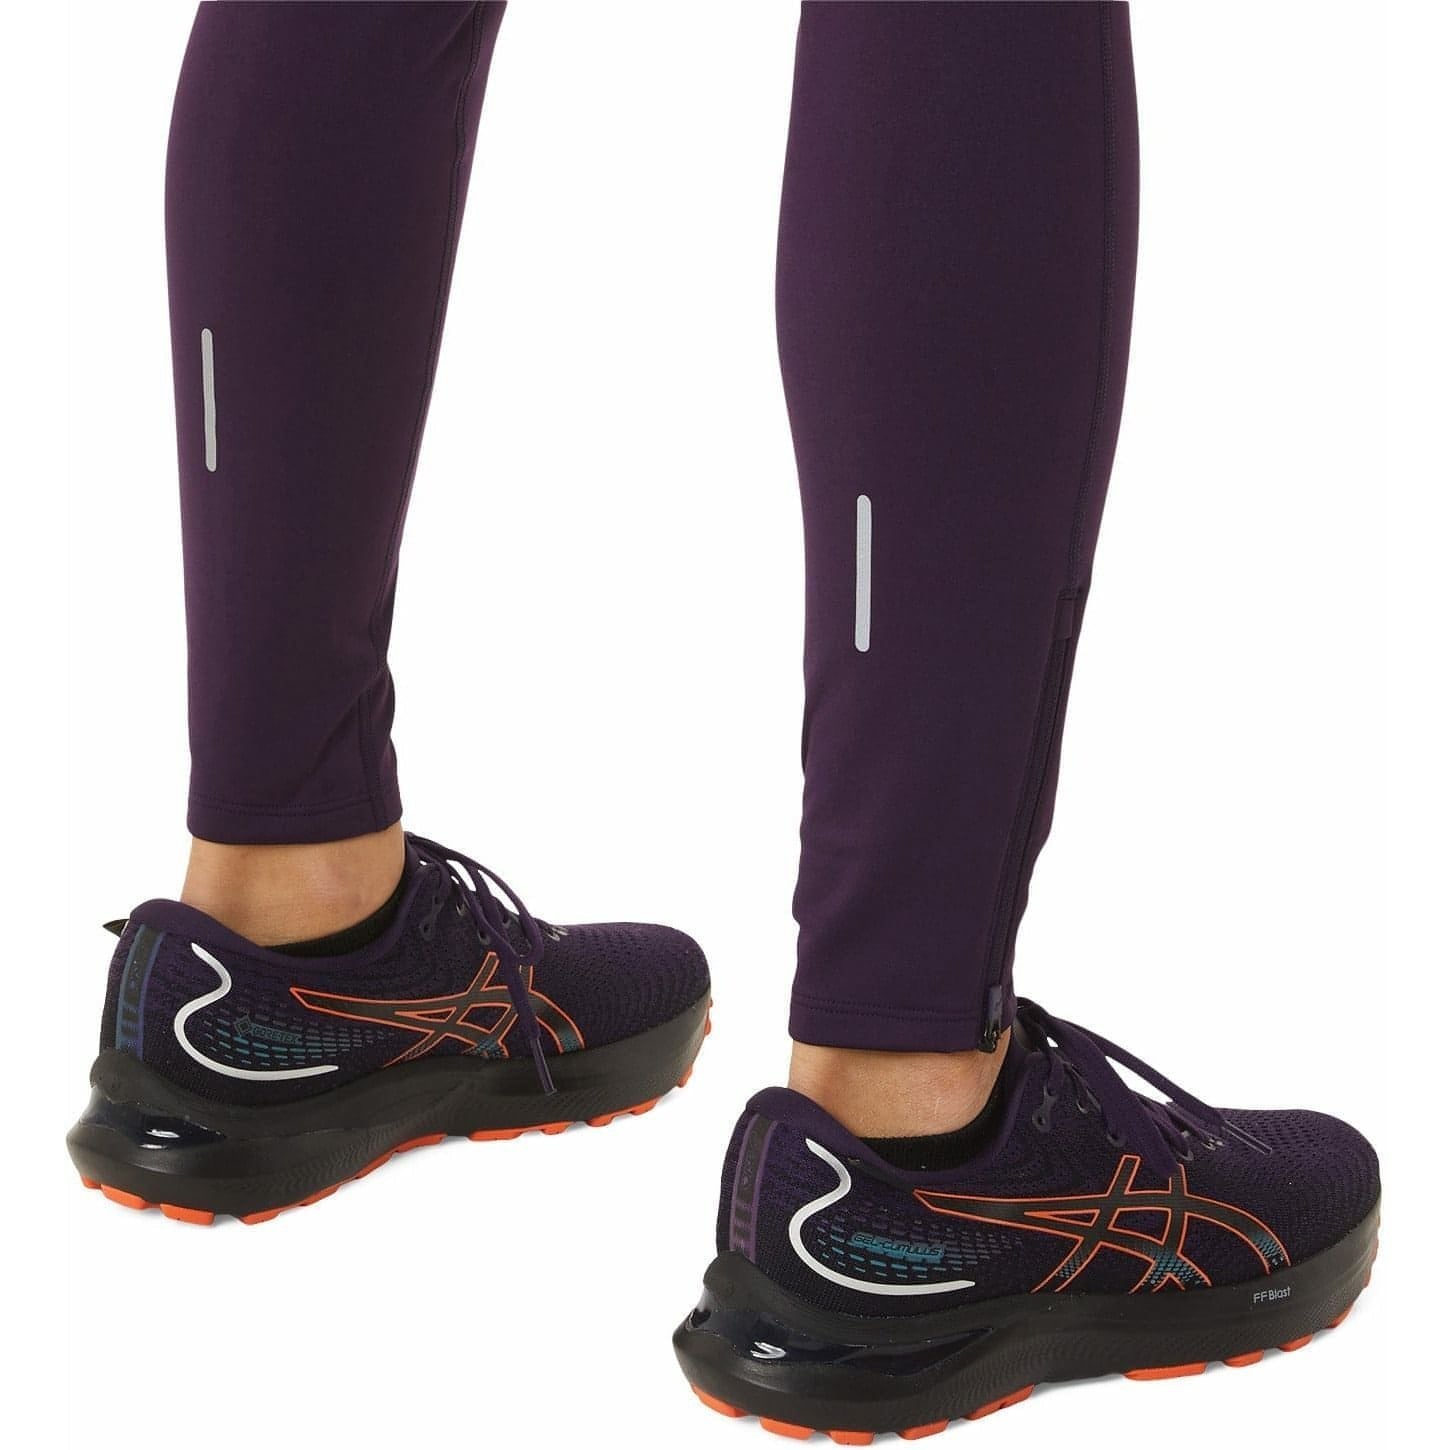 Asics Winter Womens Long Running Tights - Purple - Start Fitness